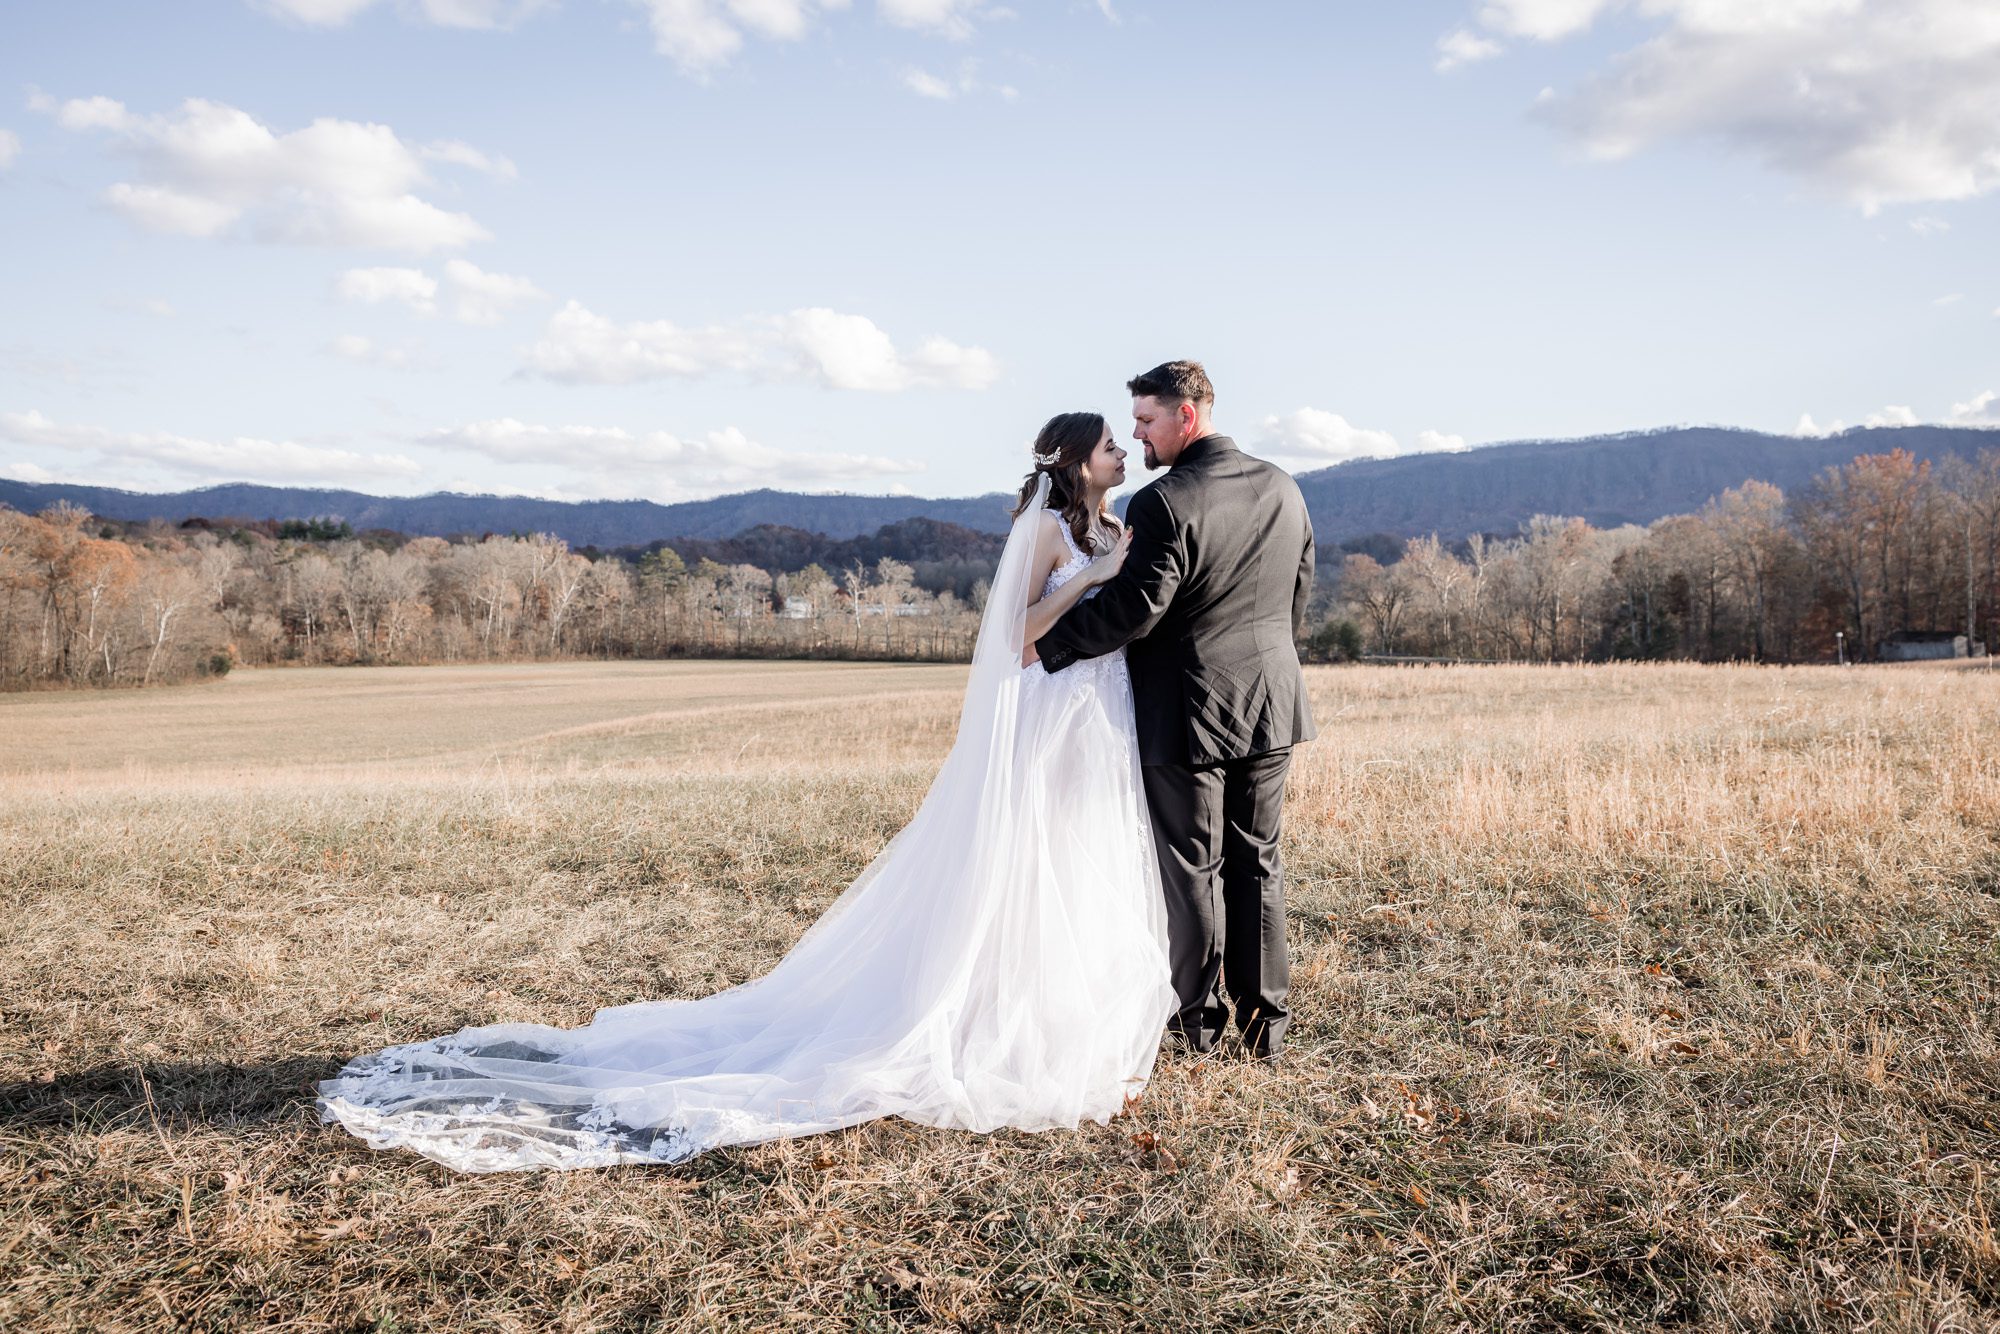 Smokey Mountain bride and groom portrait